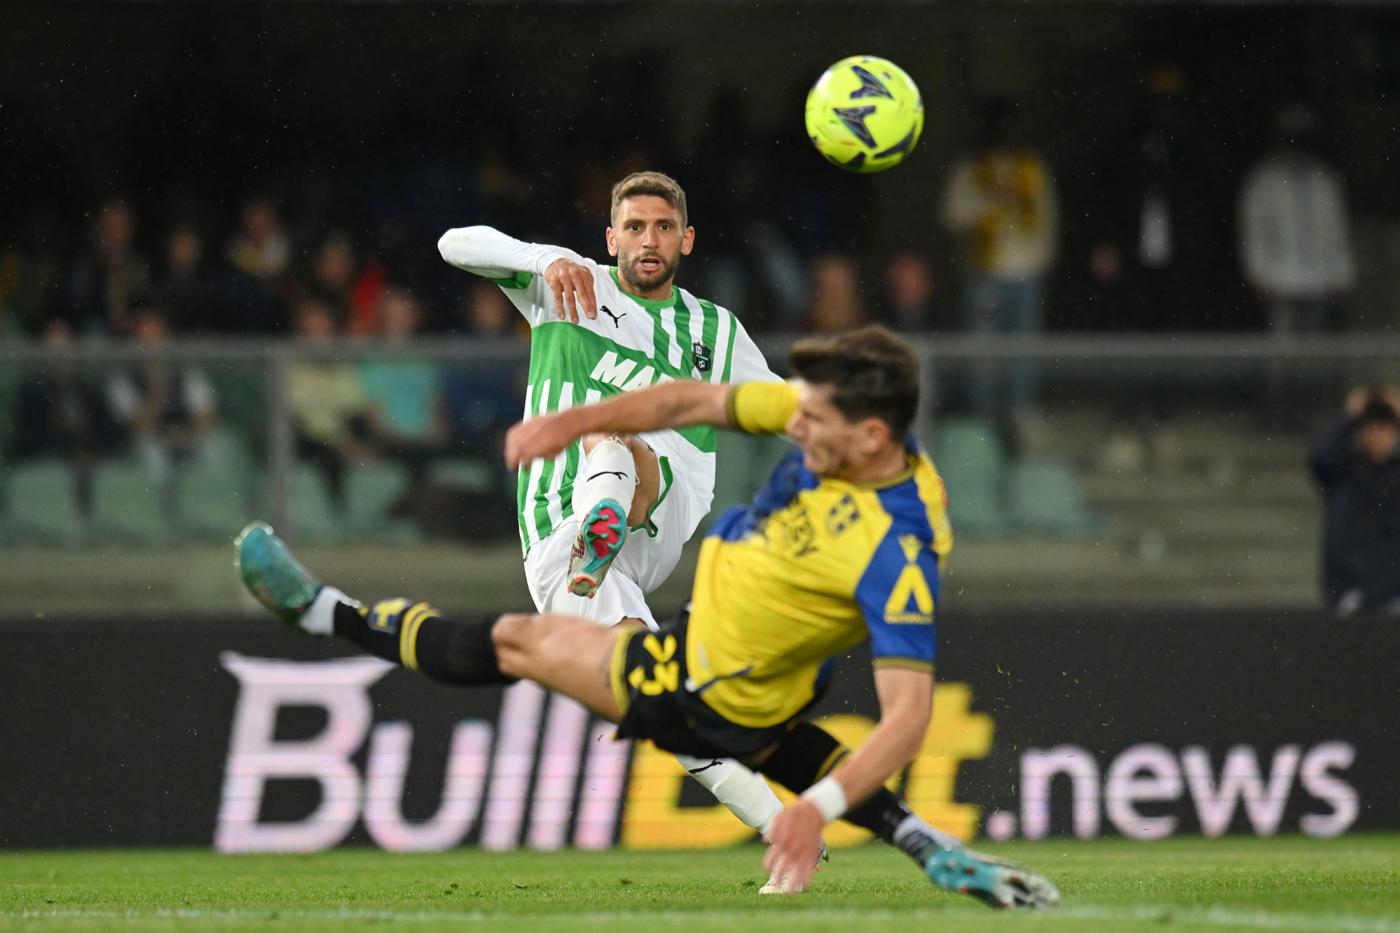 Verona - Sassuolo - 2:1. Italian Championship, round 29. Match review, statistics.